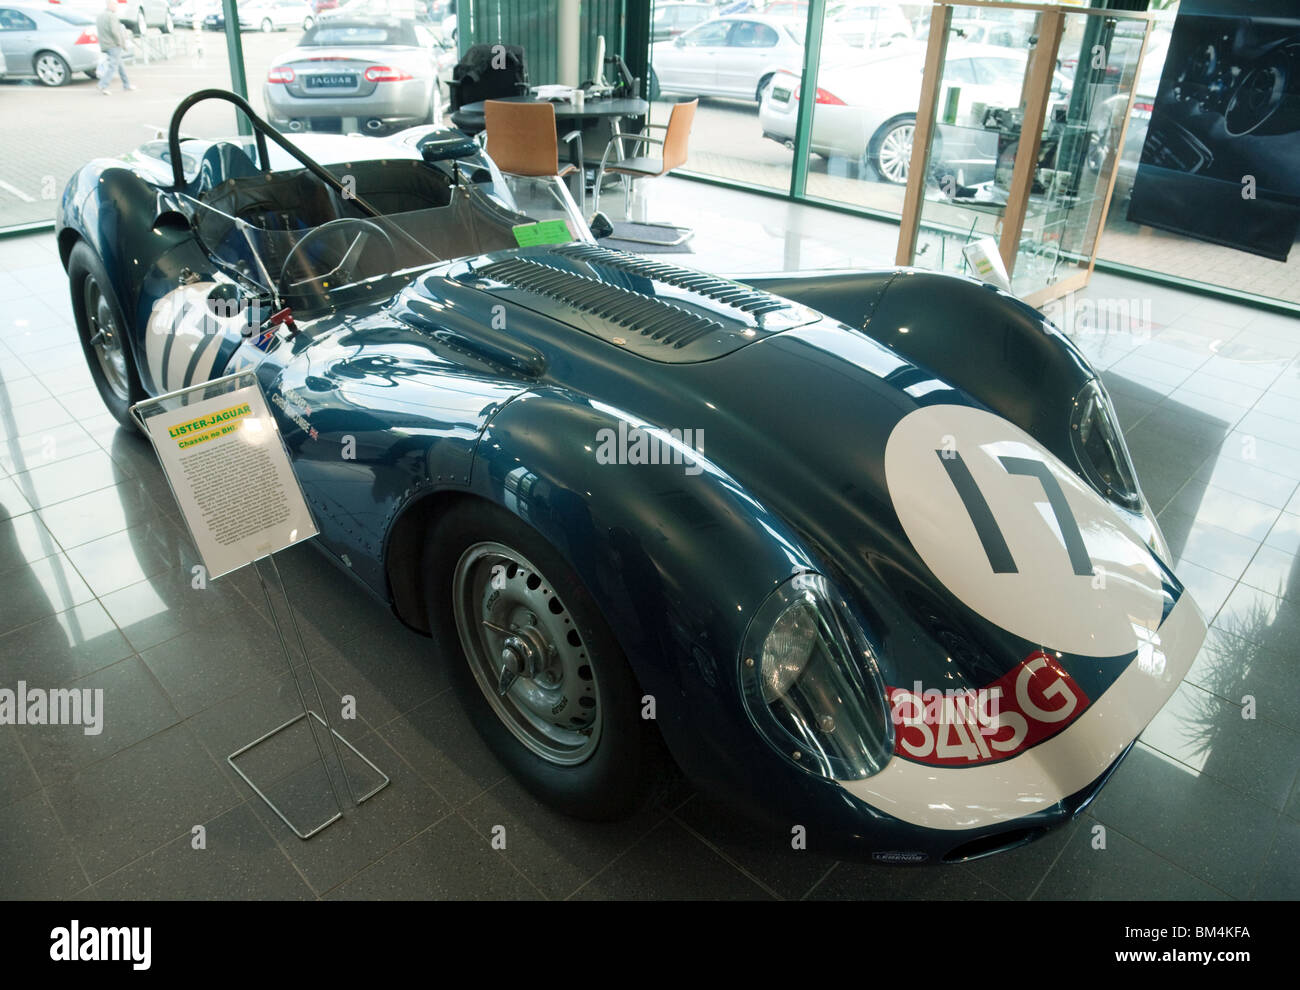 Berühmter klassischer Jaguar Sportwagen im Jaguar Händlerbetrieb Marshalls Cambridge UK Stockfoto